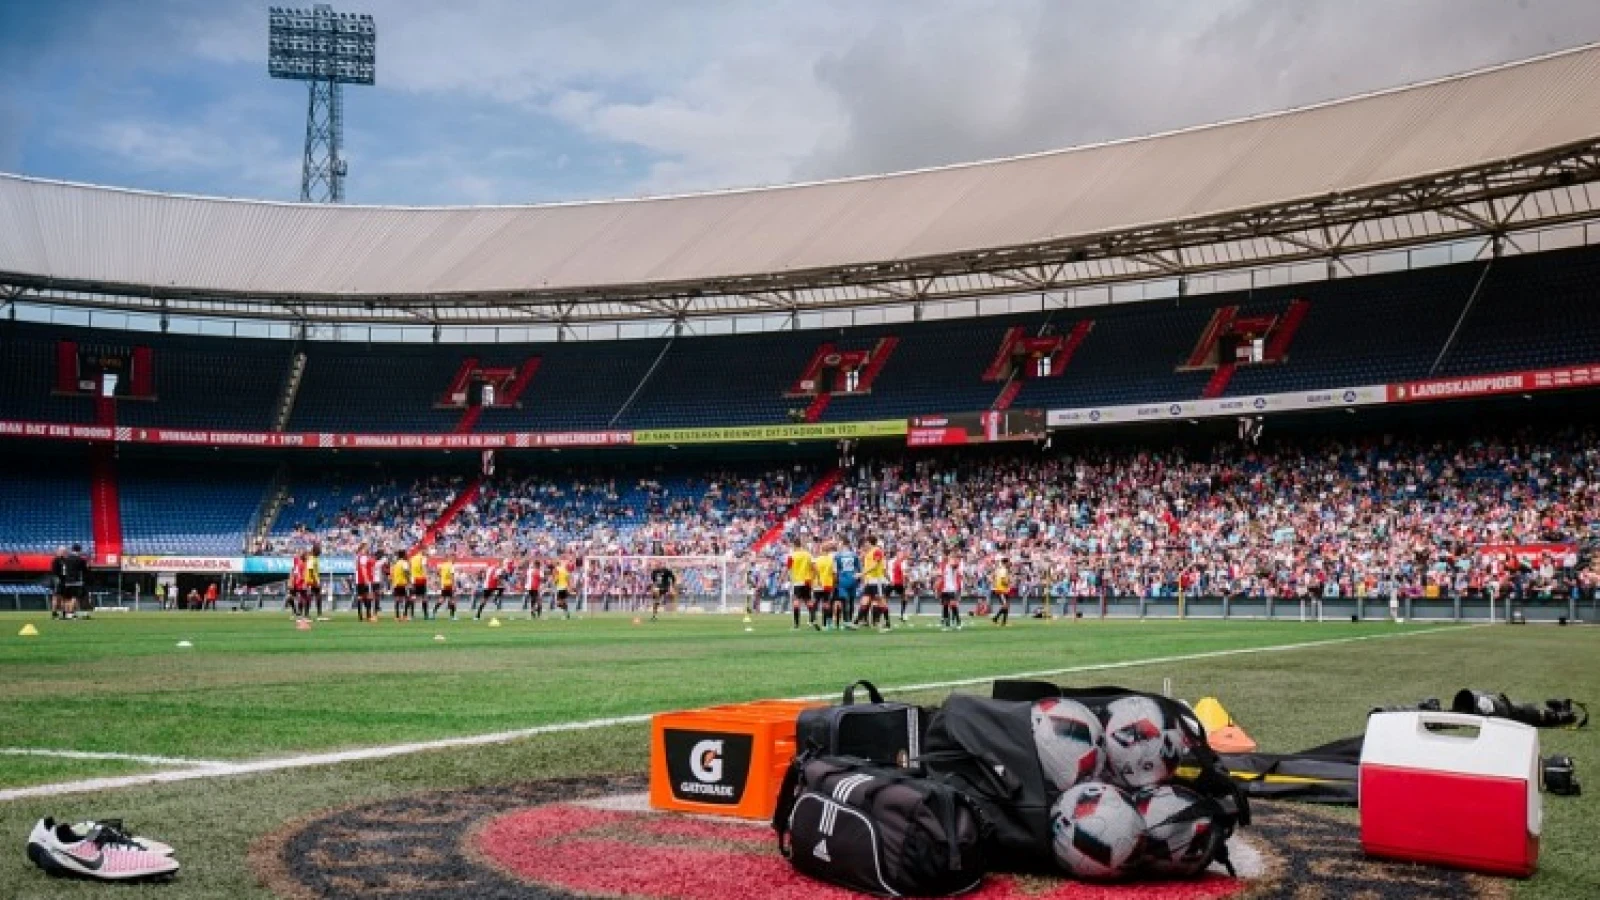 LIVE 14:30 | Eerste openbare training Feyenoord seizoen 18/19